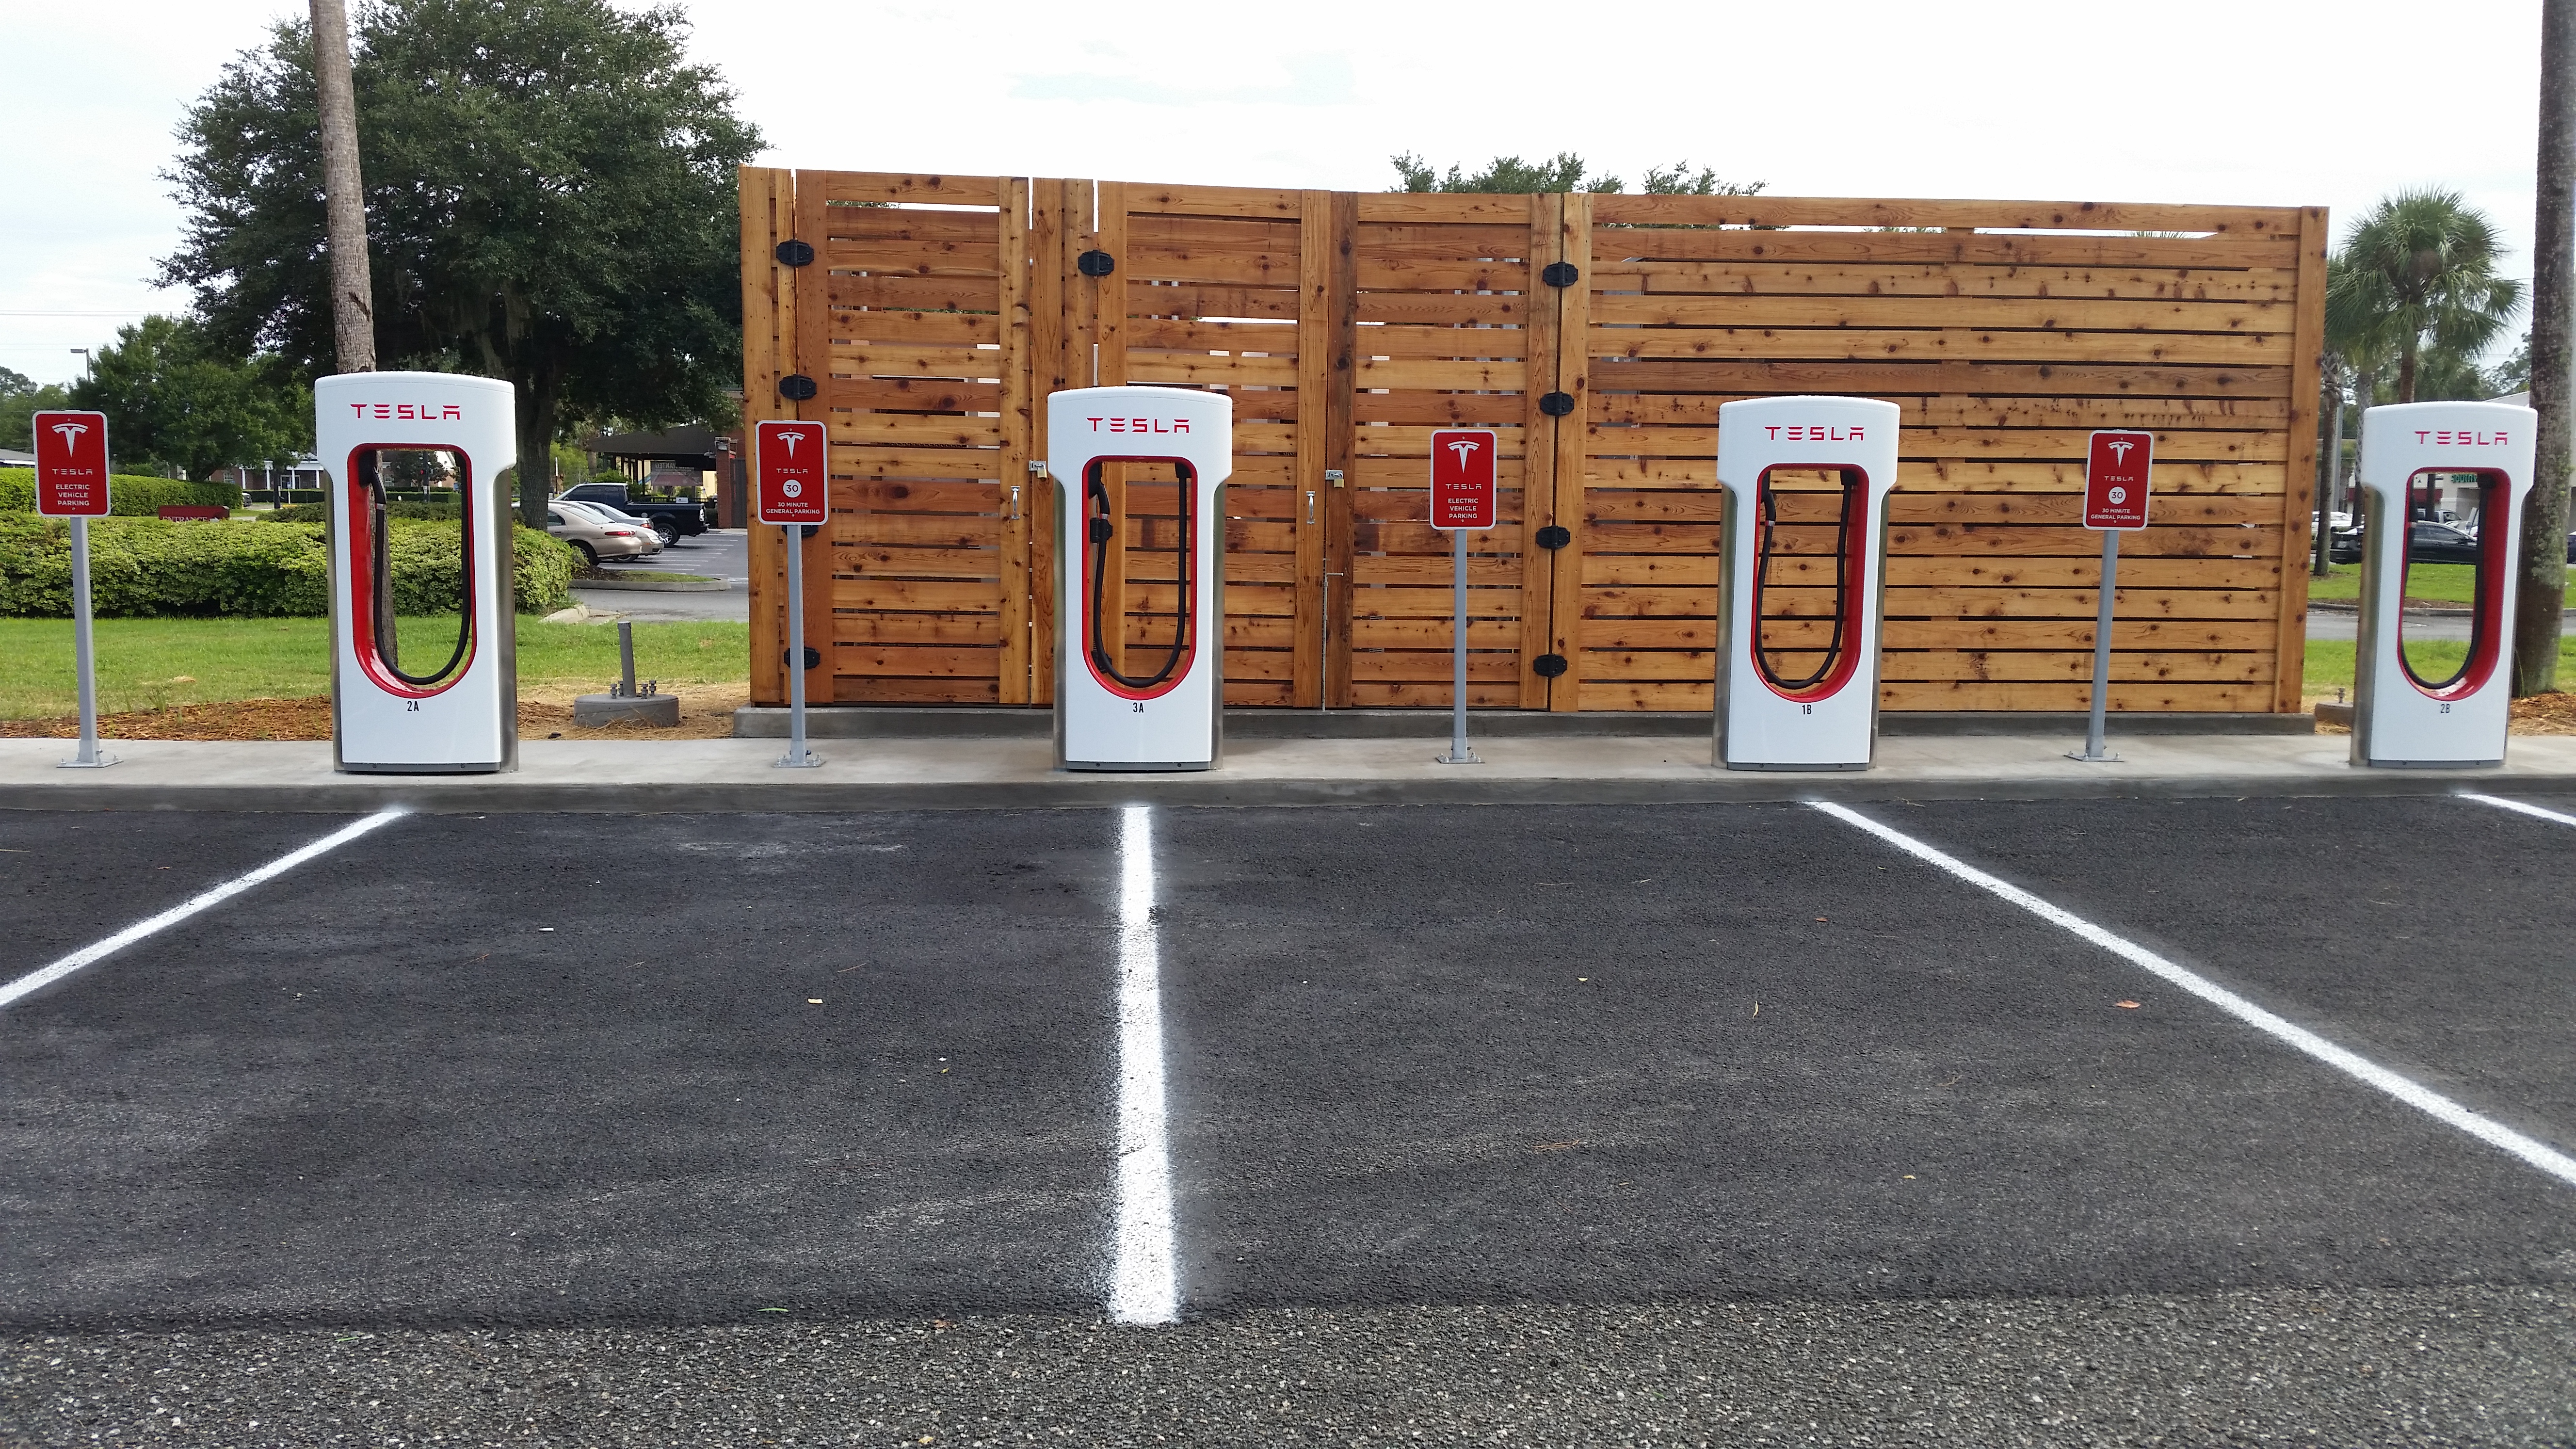 Tesla charging station #OcalaSuperChargerTesla it may have been #